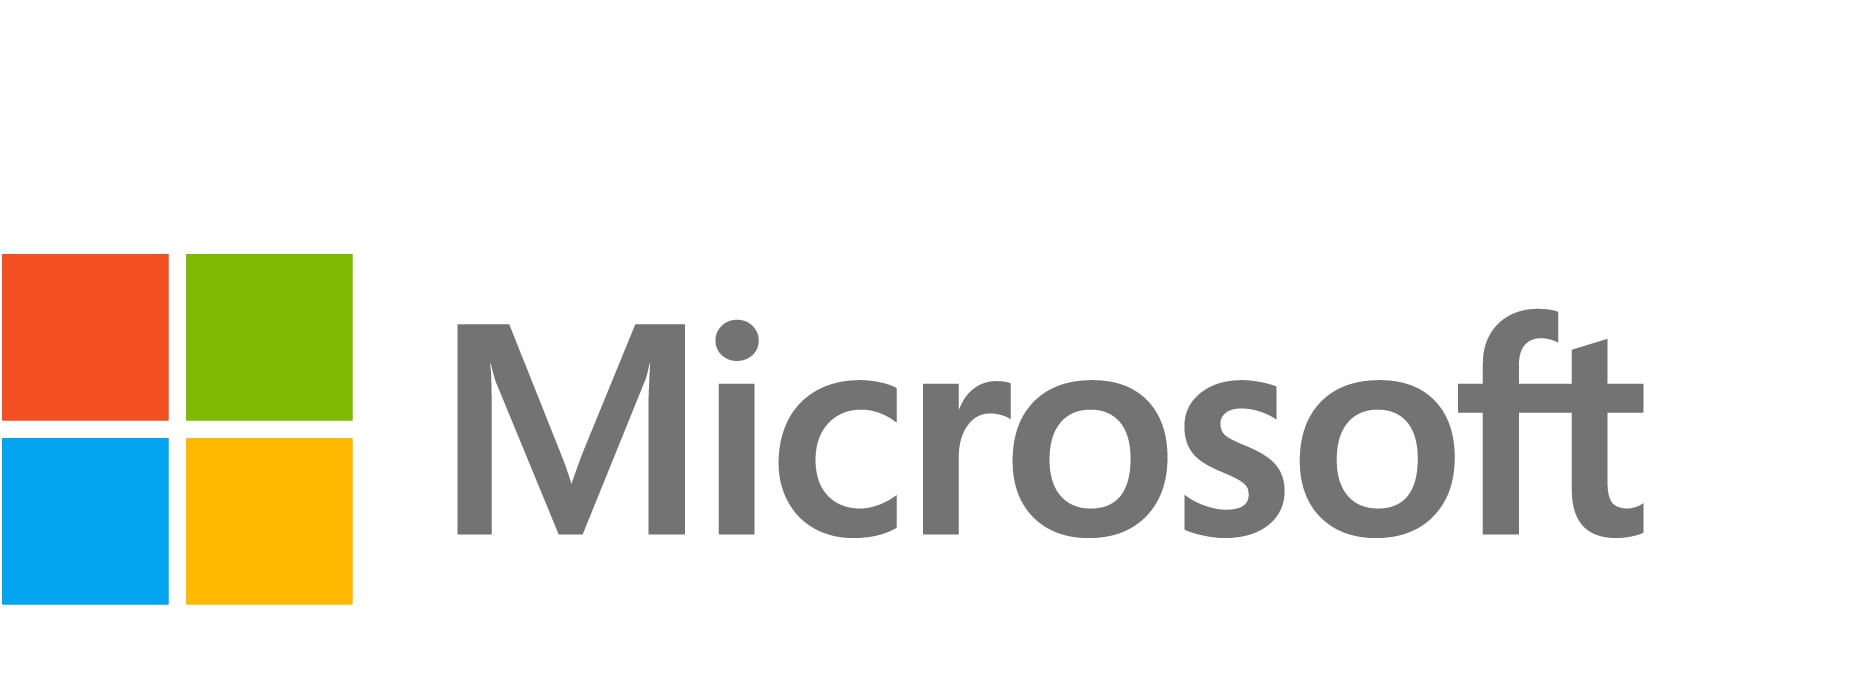 Microsoft Dynamics 365 for Operations, Enterprise edition - Sandbox Tier 5: Premier Performance testing - subscription